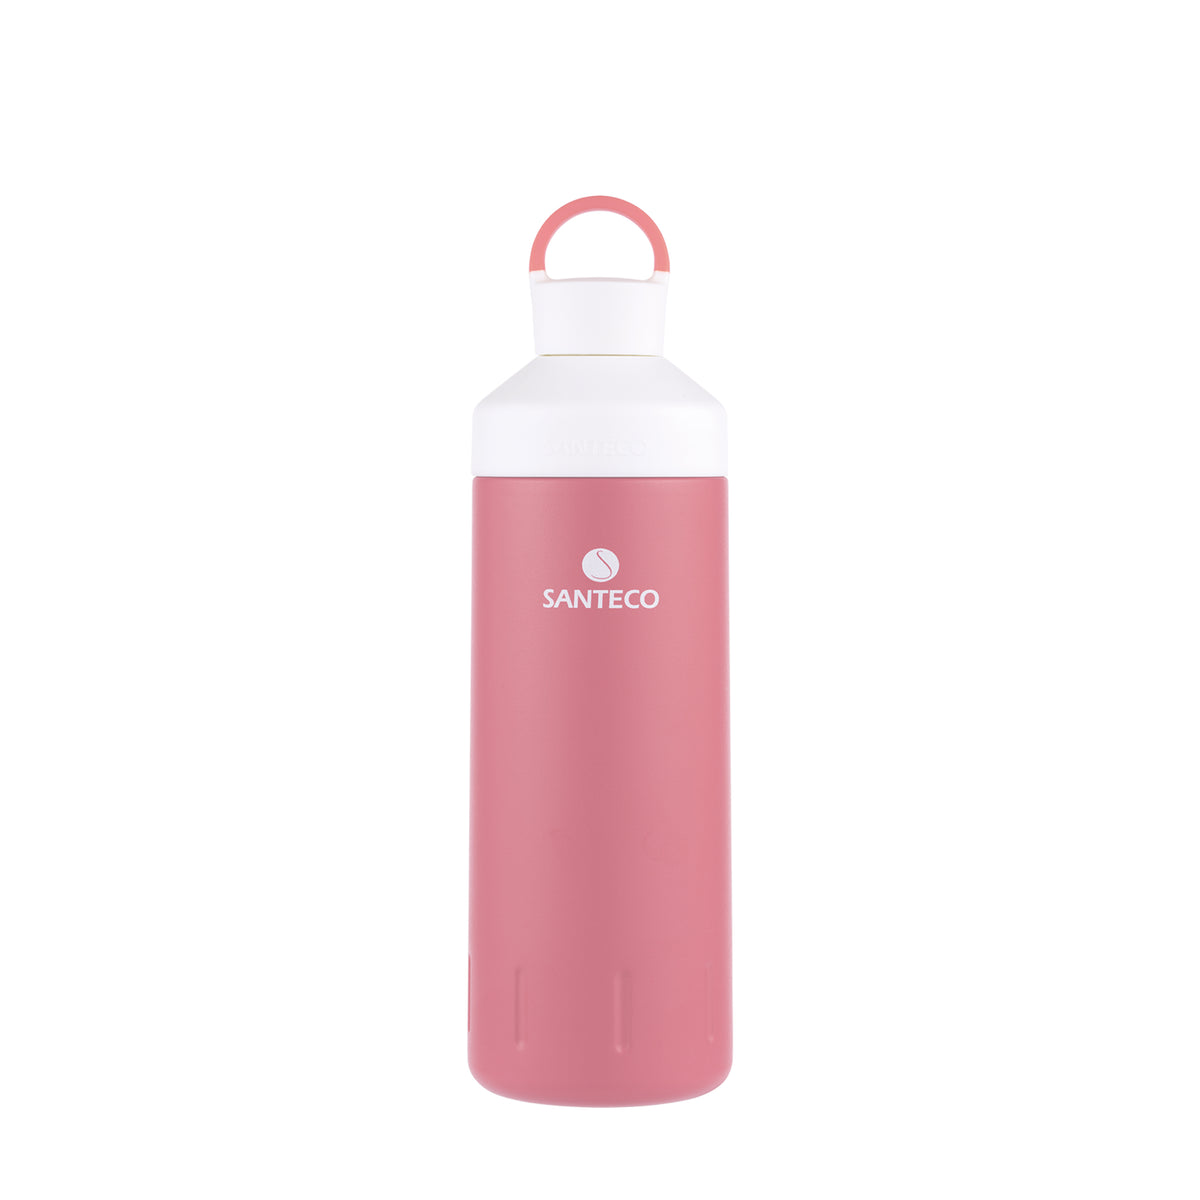 SANTECO Ocean Beverage Bottle, 20 oz, Stainless Steel, Vacuum Insulated